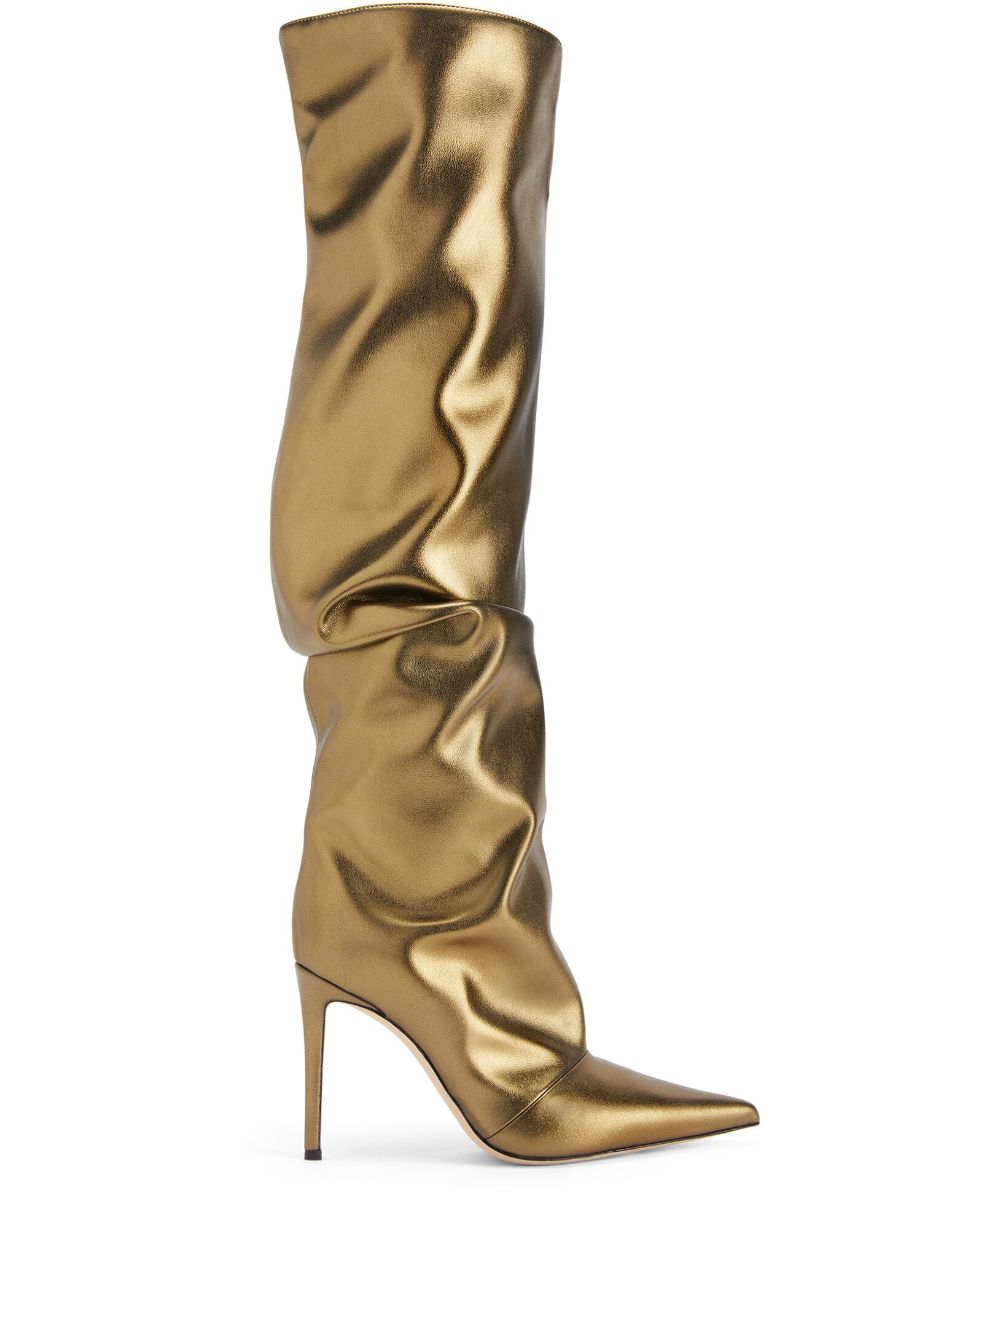 Giuseppe Zanotti GZ Gala Stiefel 105mm - Gold von Giuseppe Zanotti